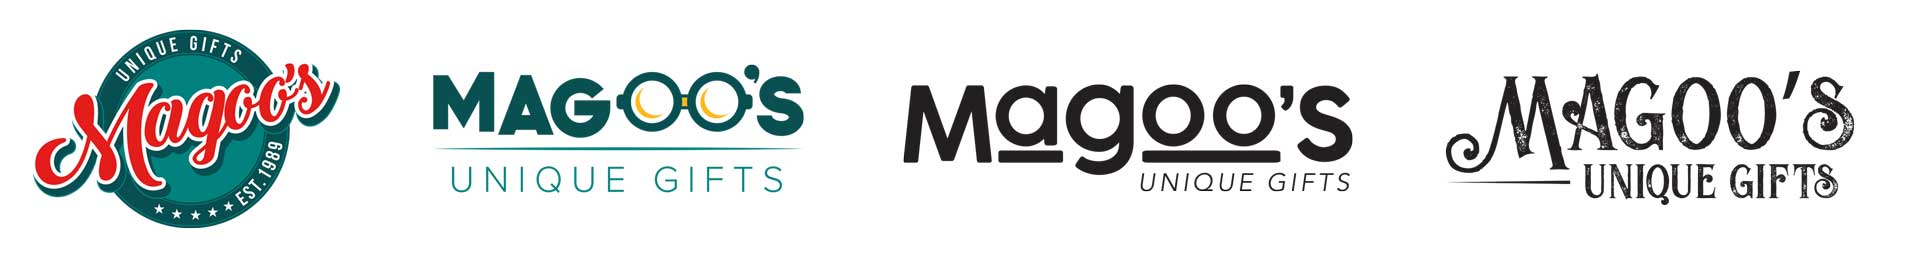 Magoo's Unique Gifts Logo Design